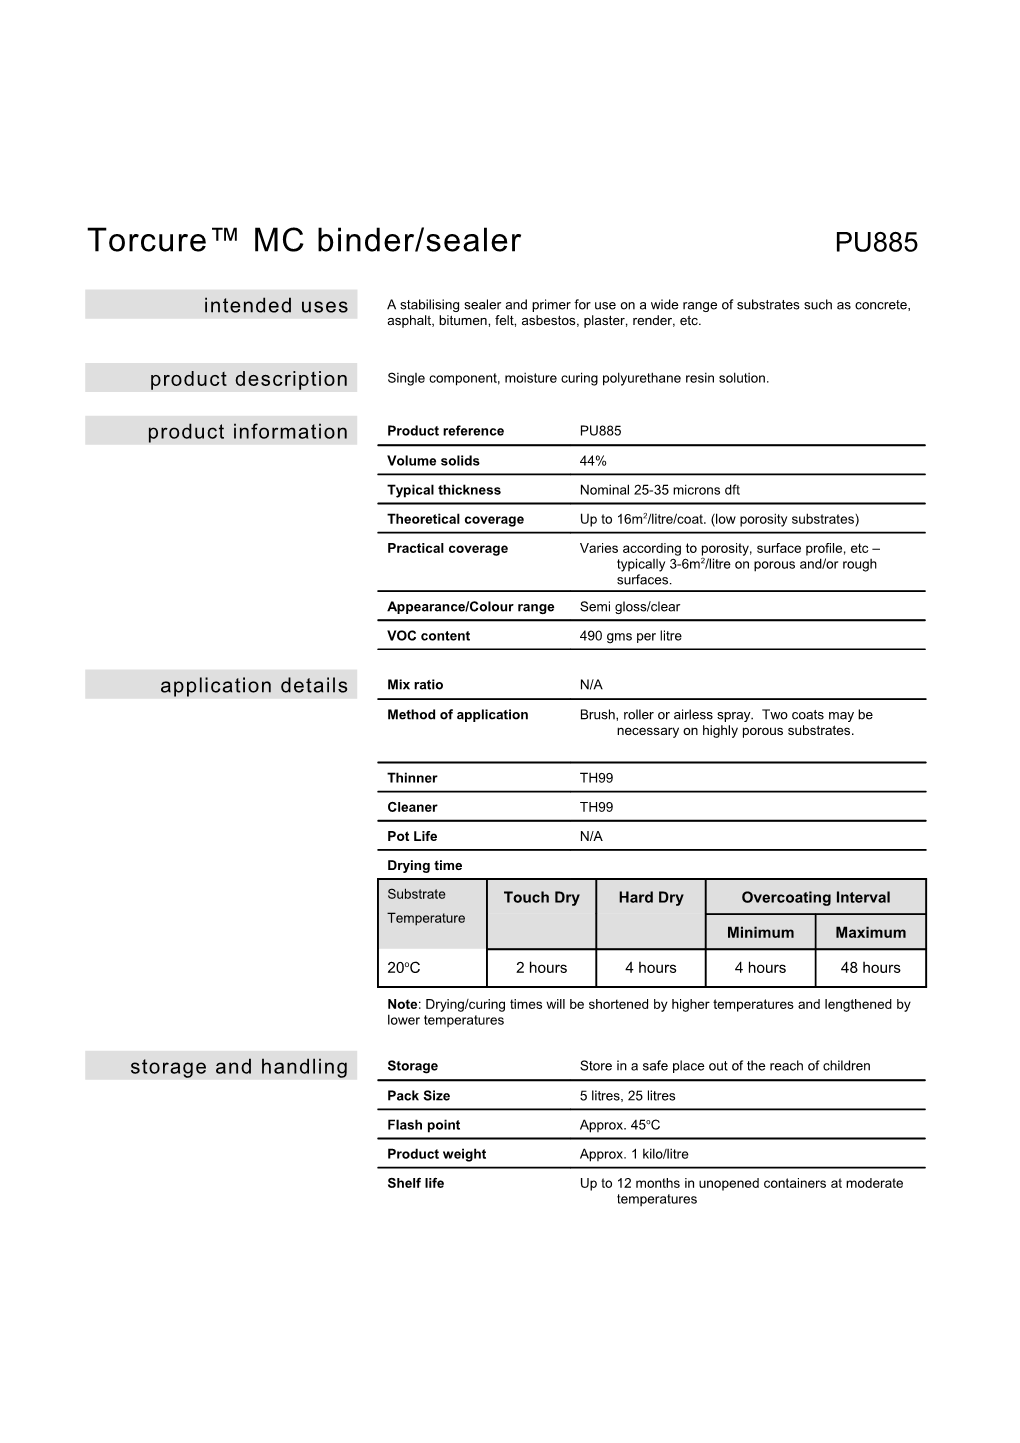 Torcure MC Binder/Sealer